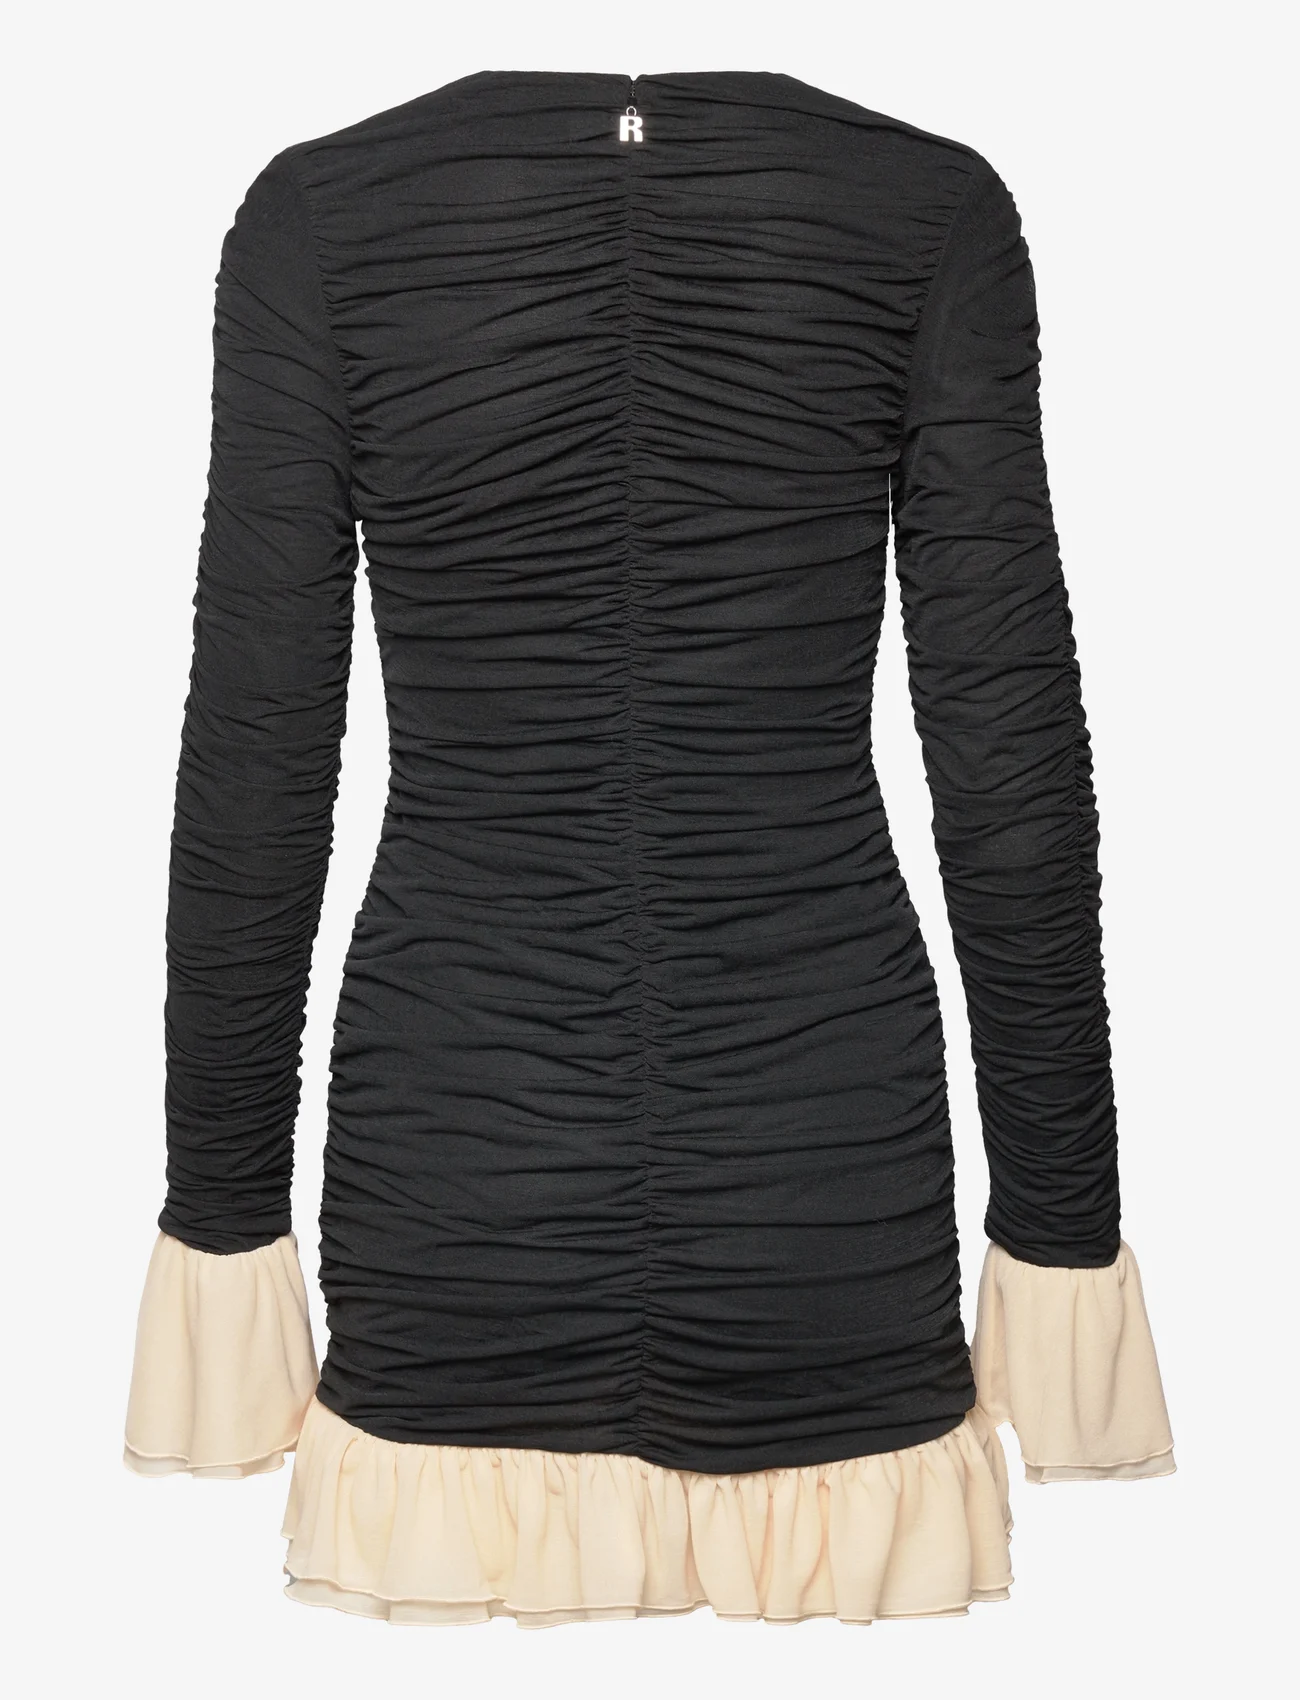 ROTATE Birger Christensen - Mini Ruched Ls Dress - ballīšu apģērbs par outlet cenām - 1000 black comb. - 1